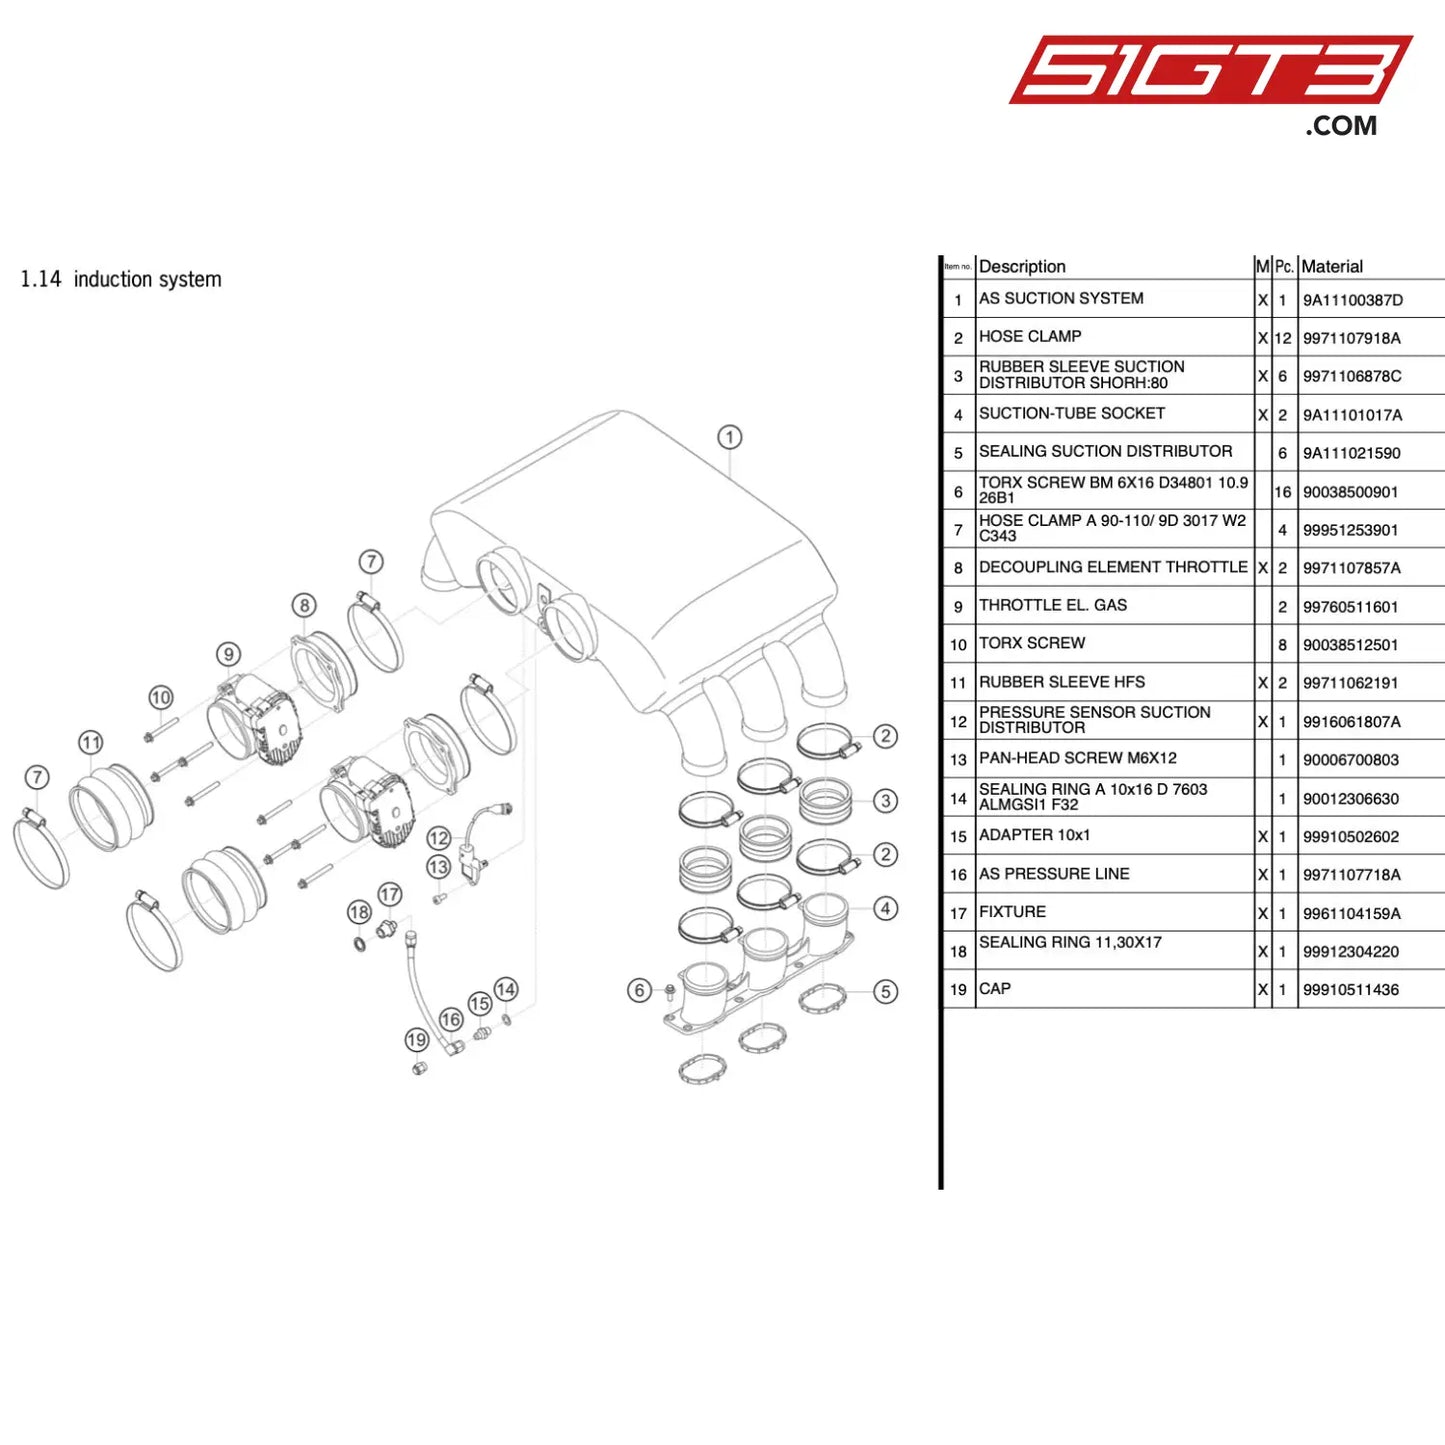 As Suction System - 9A11100387D [Porsche 911 Gt3 R Type 991 (Gen 1)] Induction System